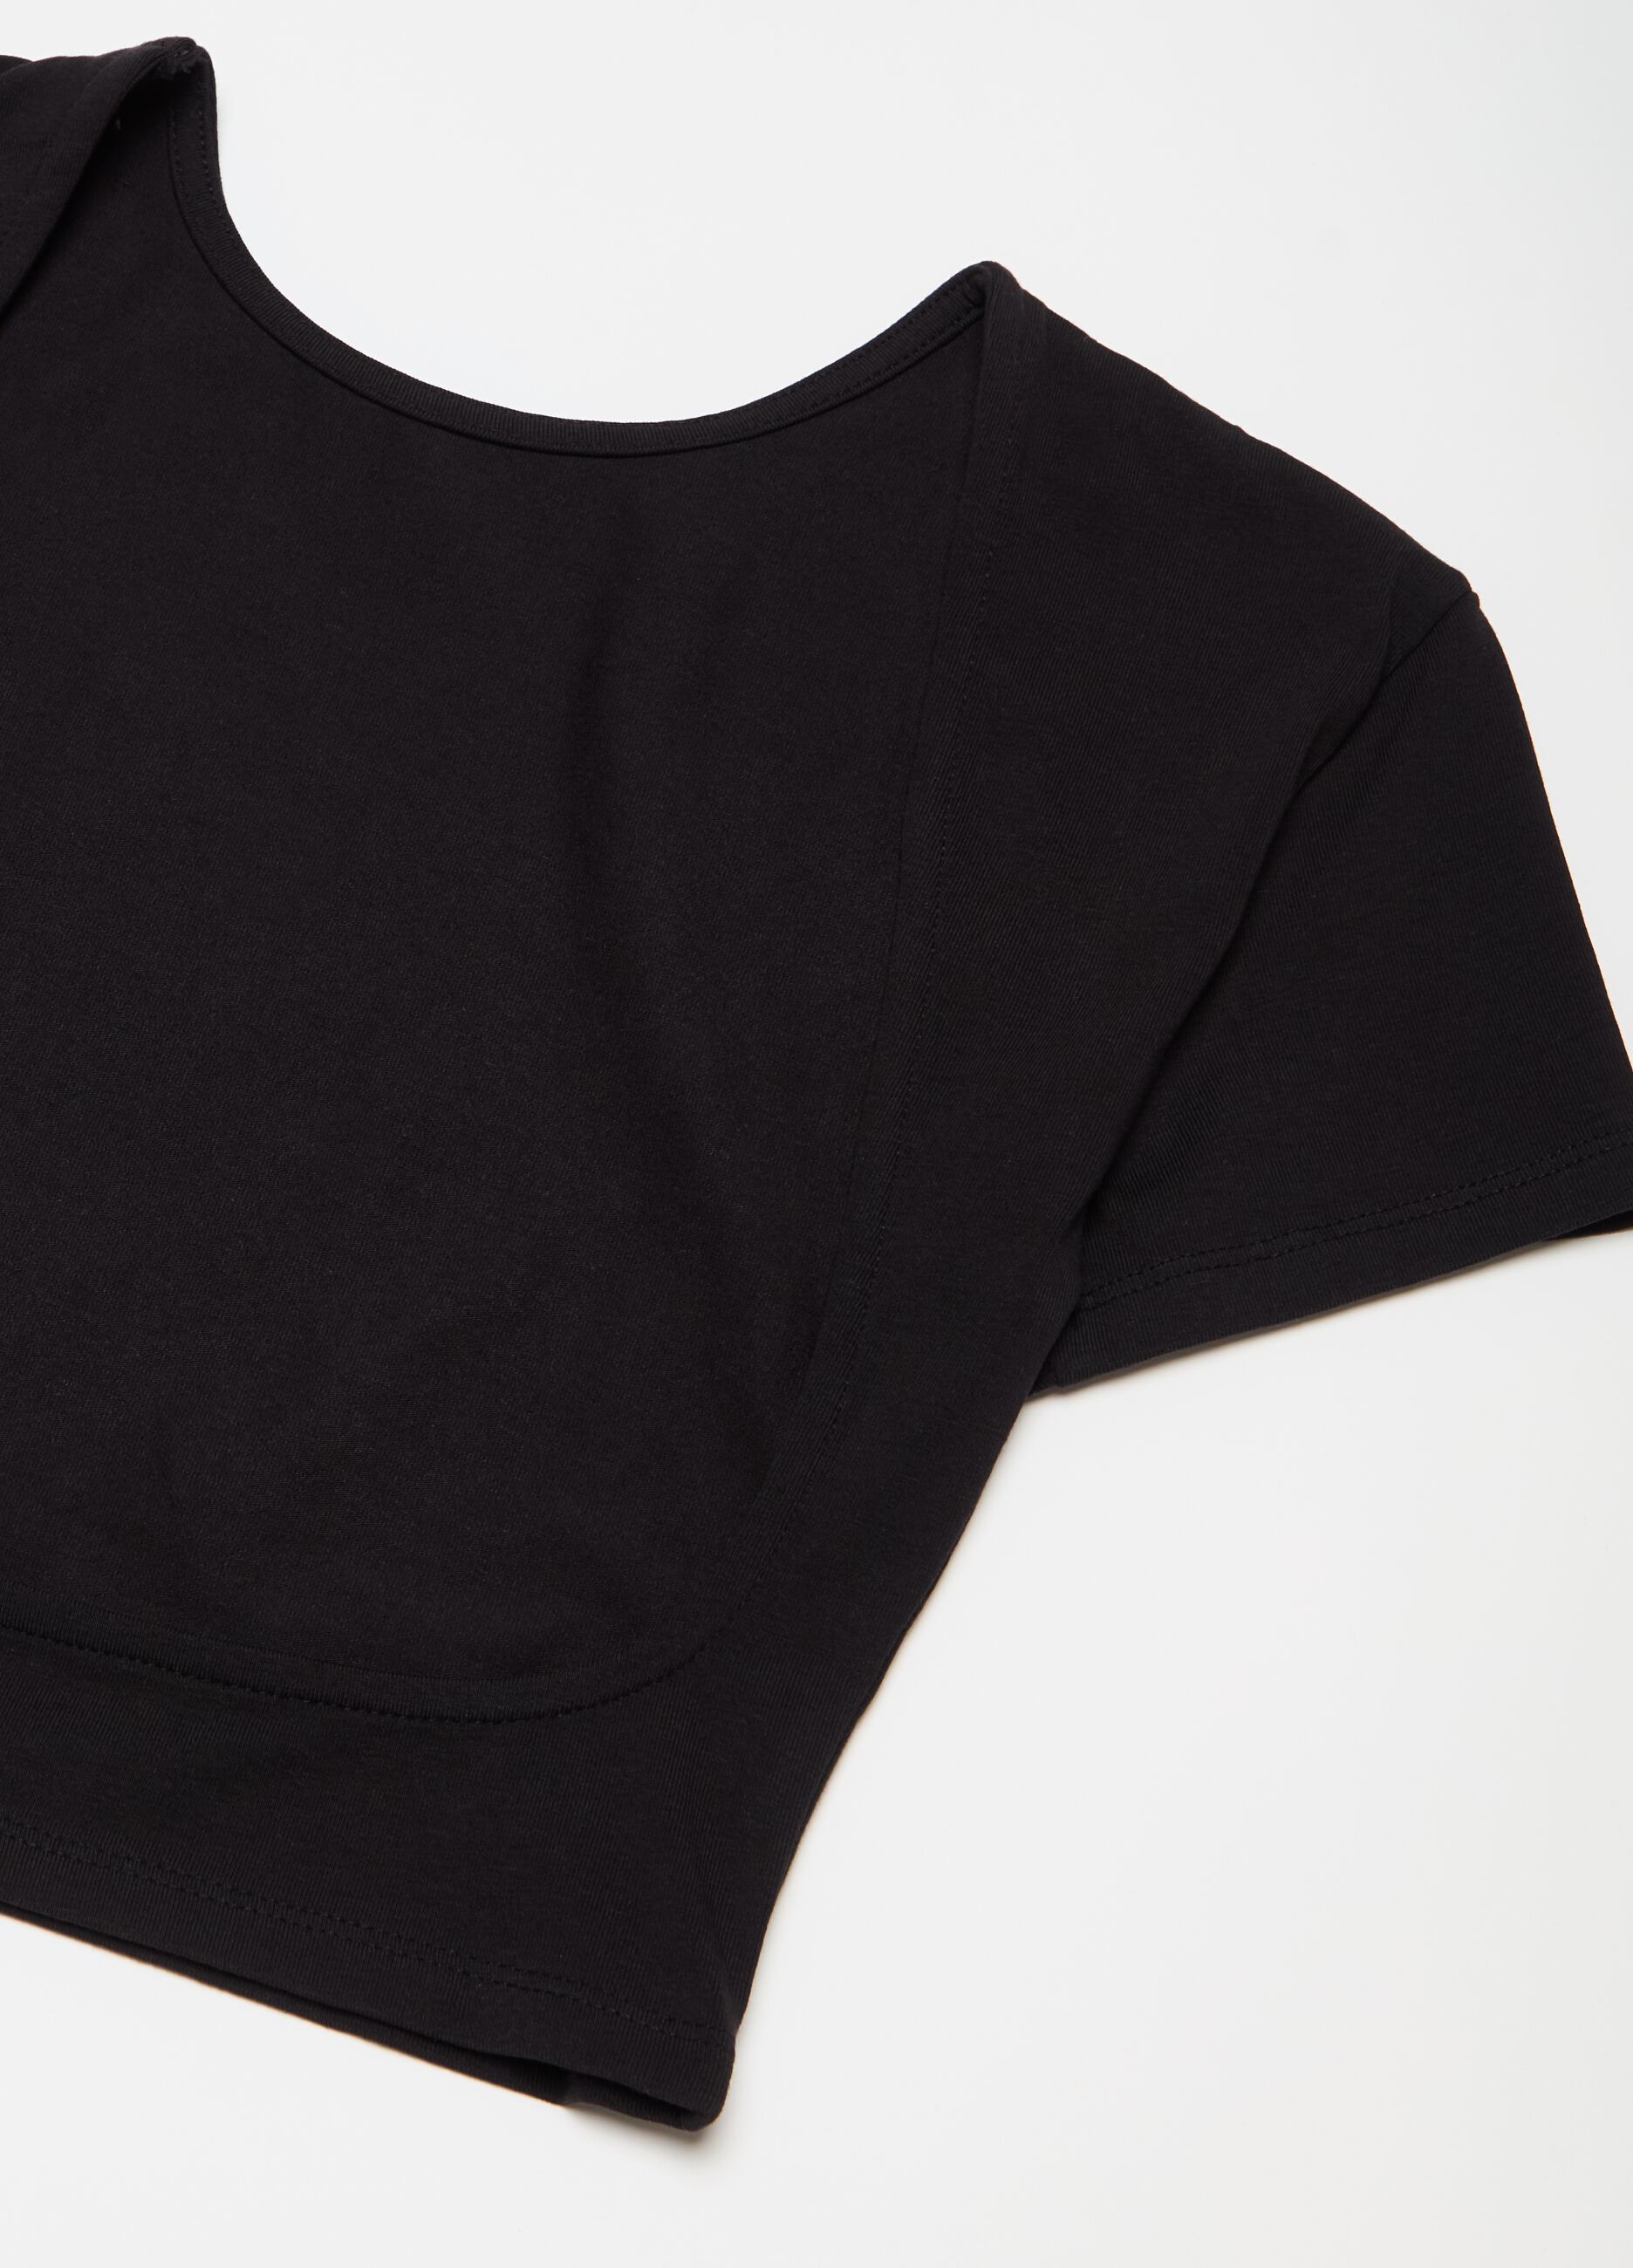 Backless T-shirt Crop Black